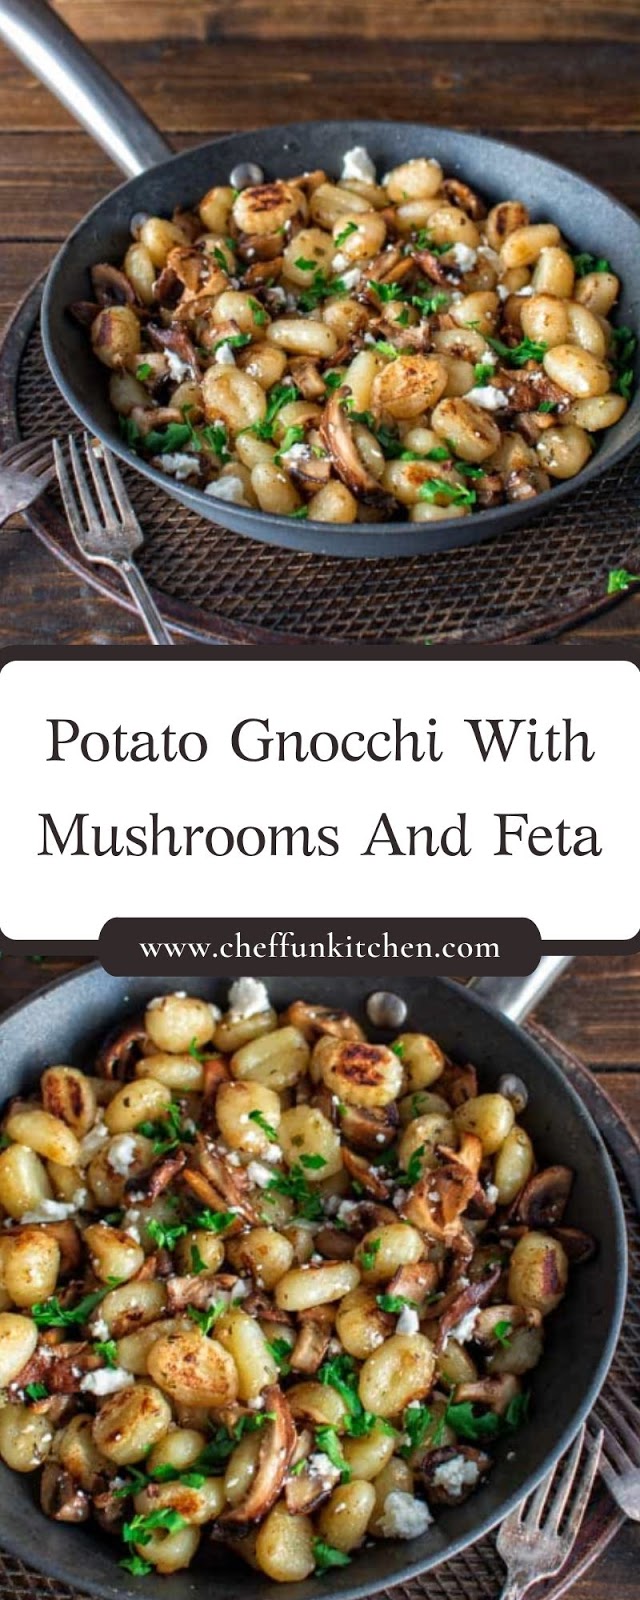 Potato Gnocchi With Mushrooms And Feta